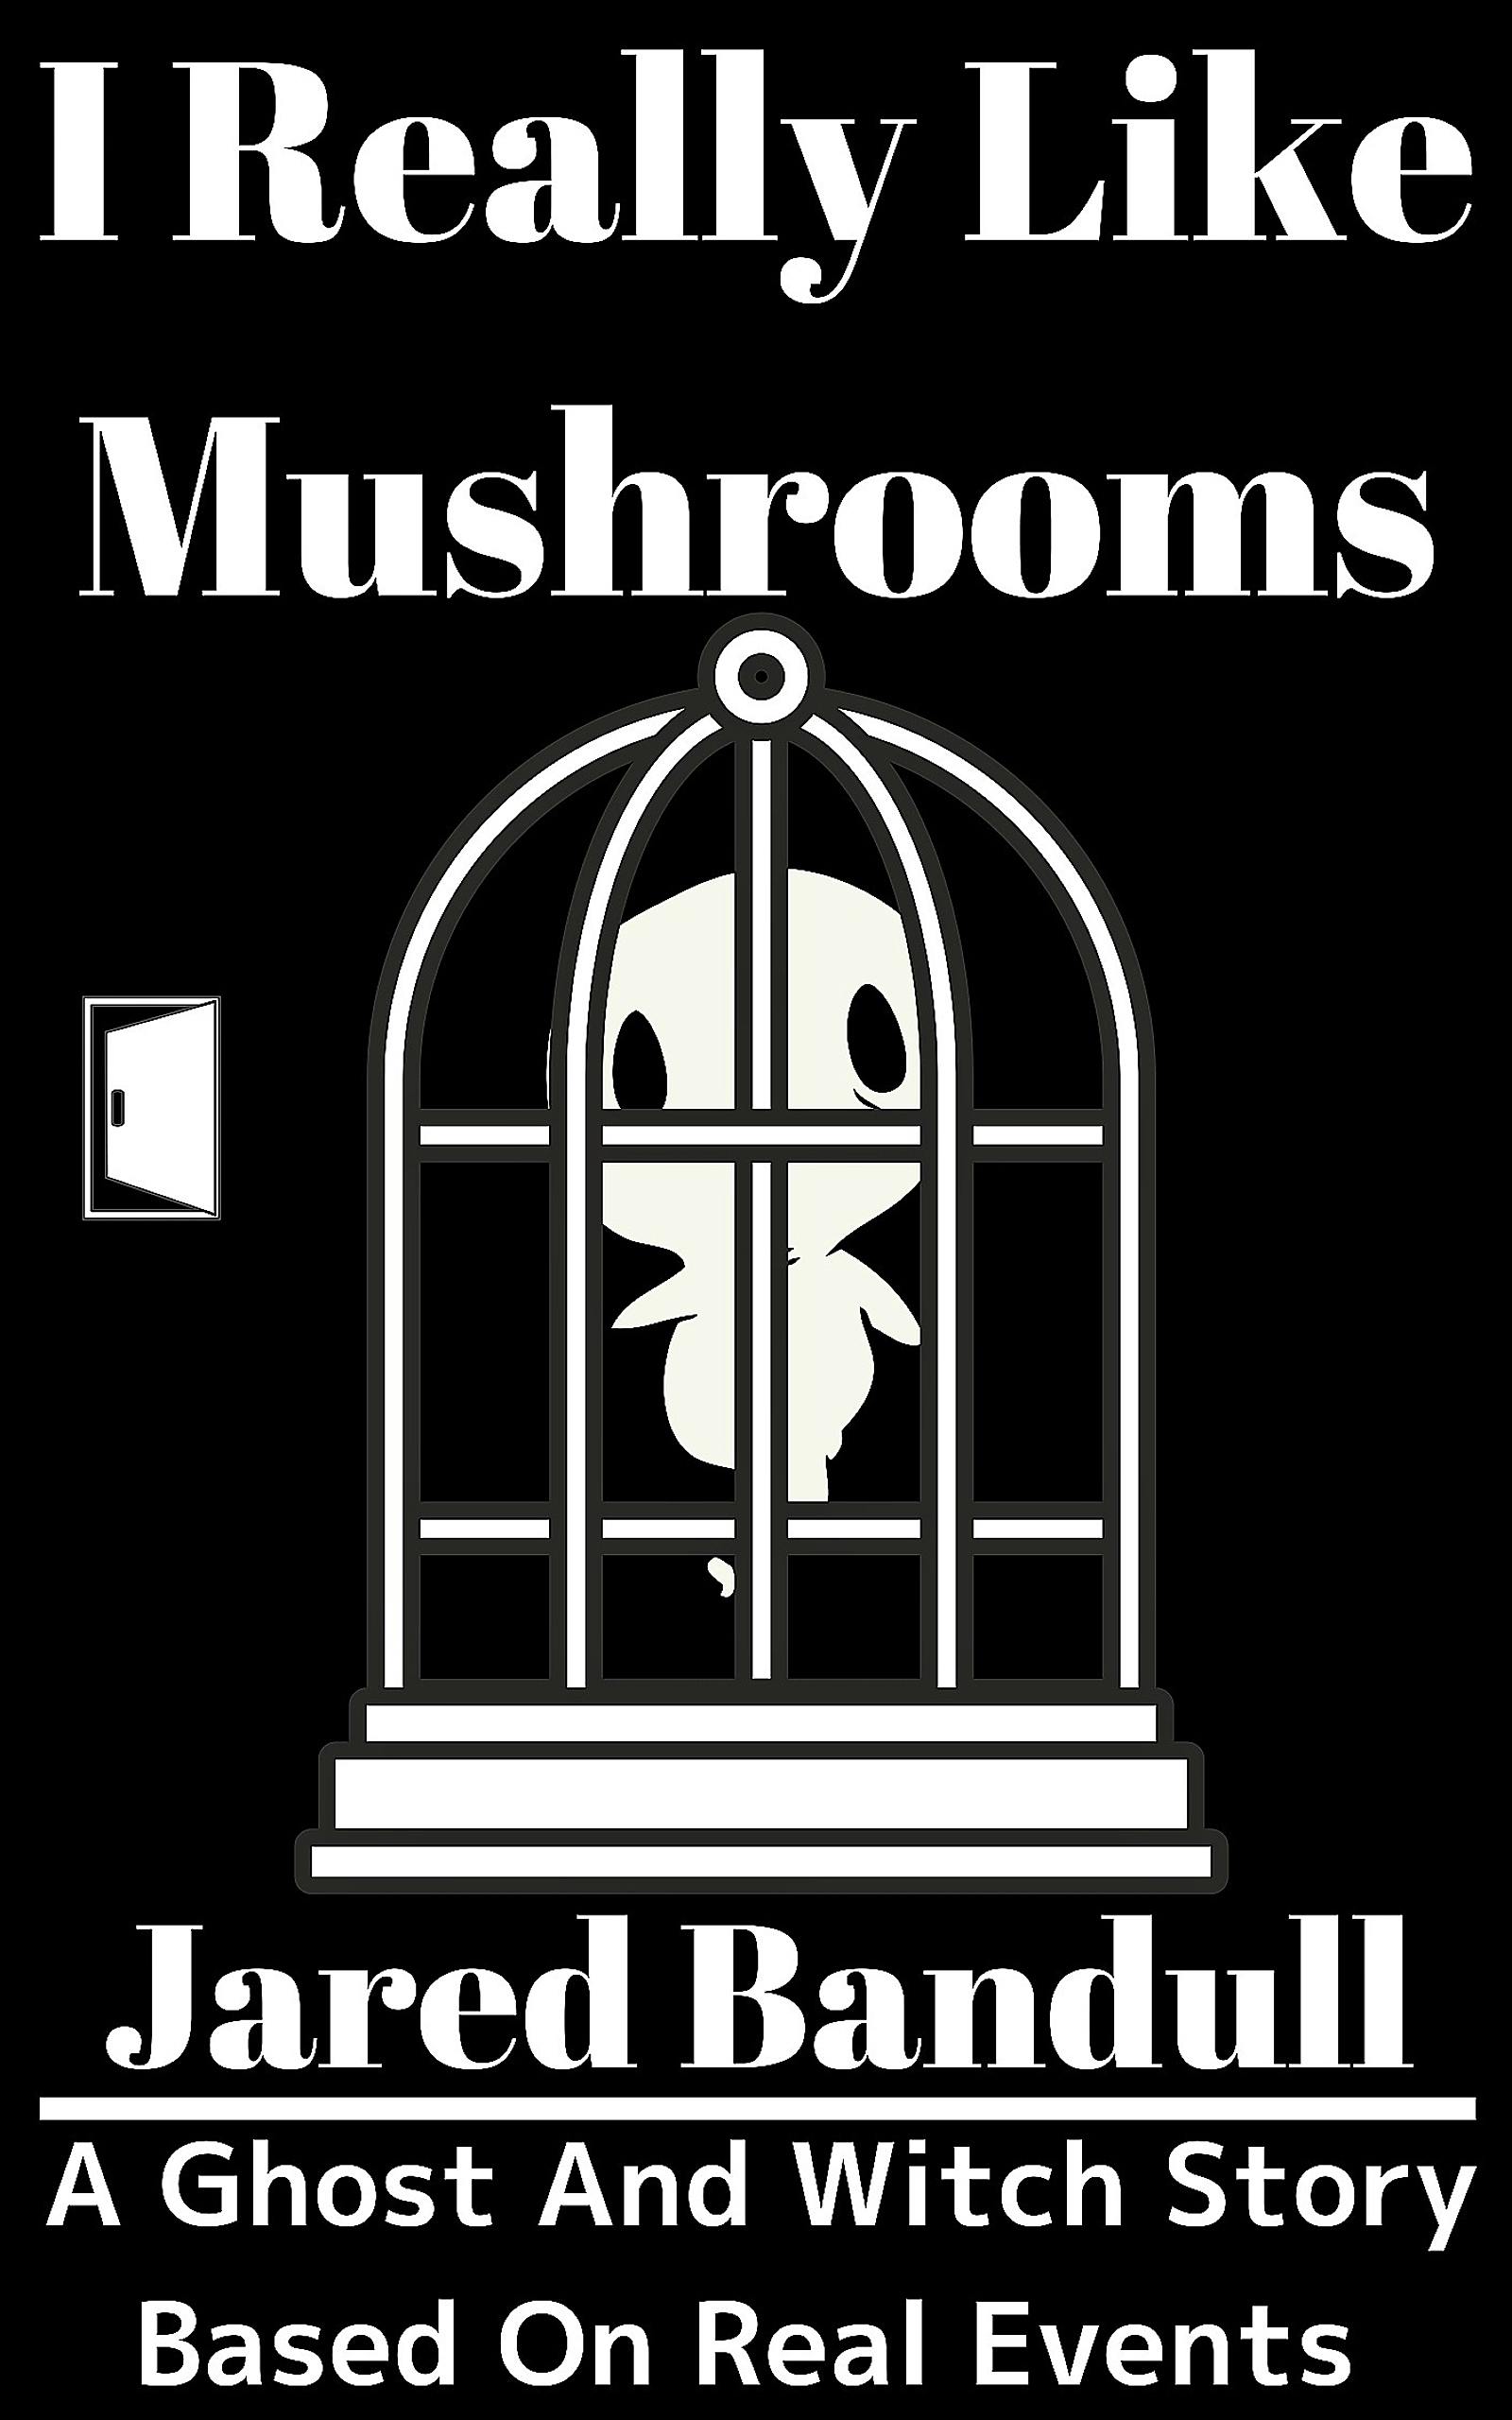 I Really Like Mushrooms - Jared Bandull